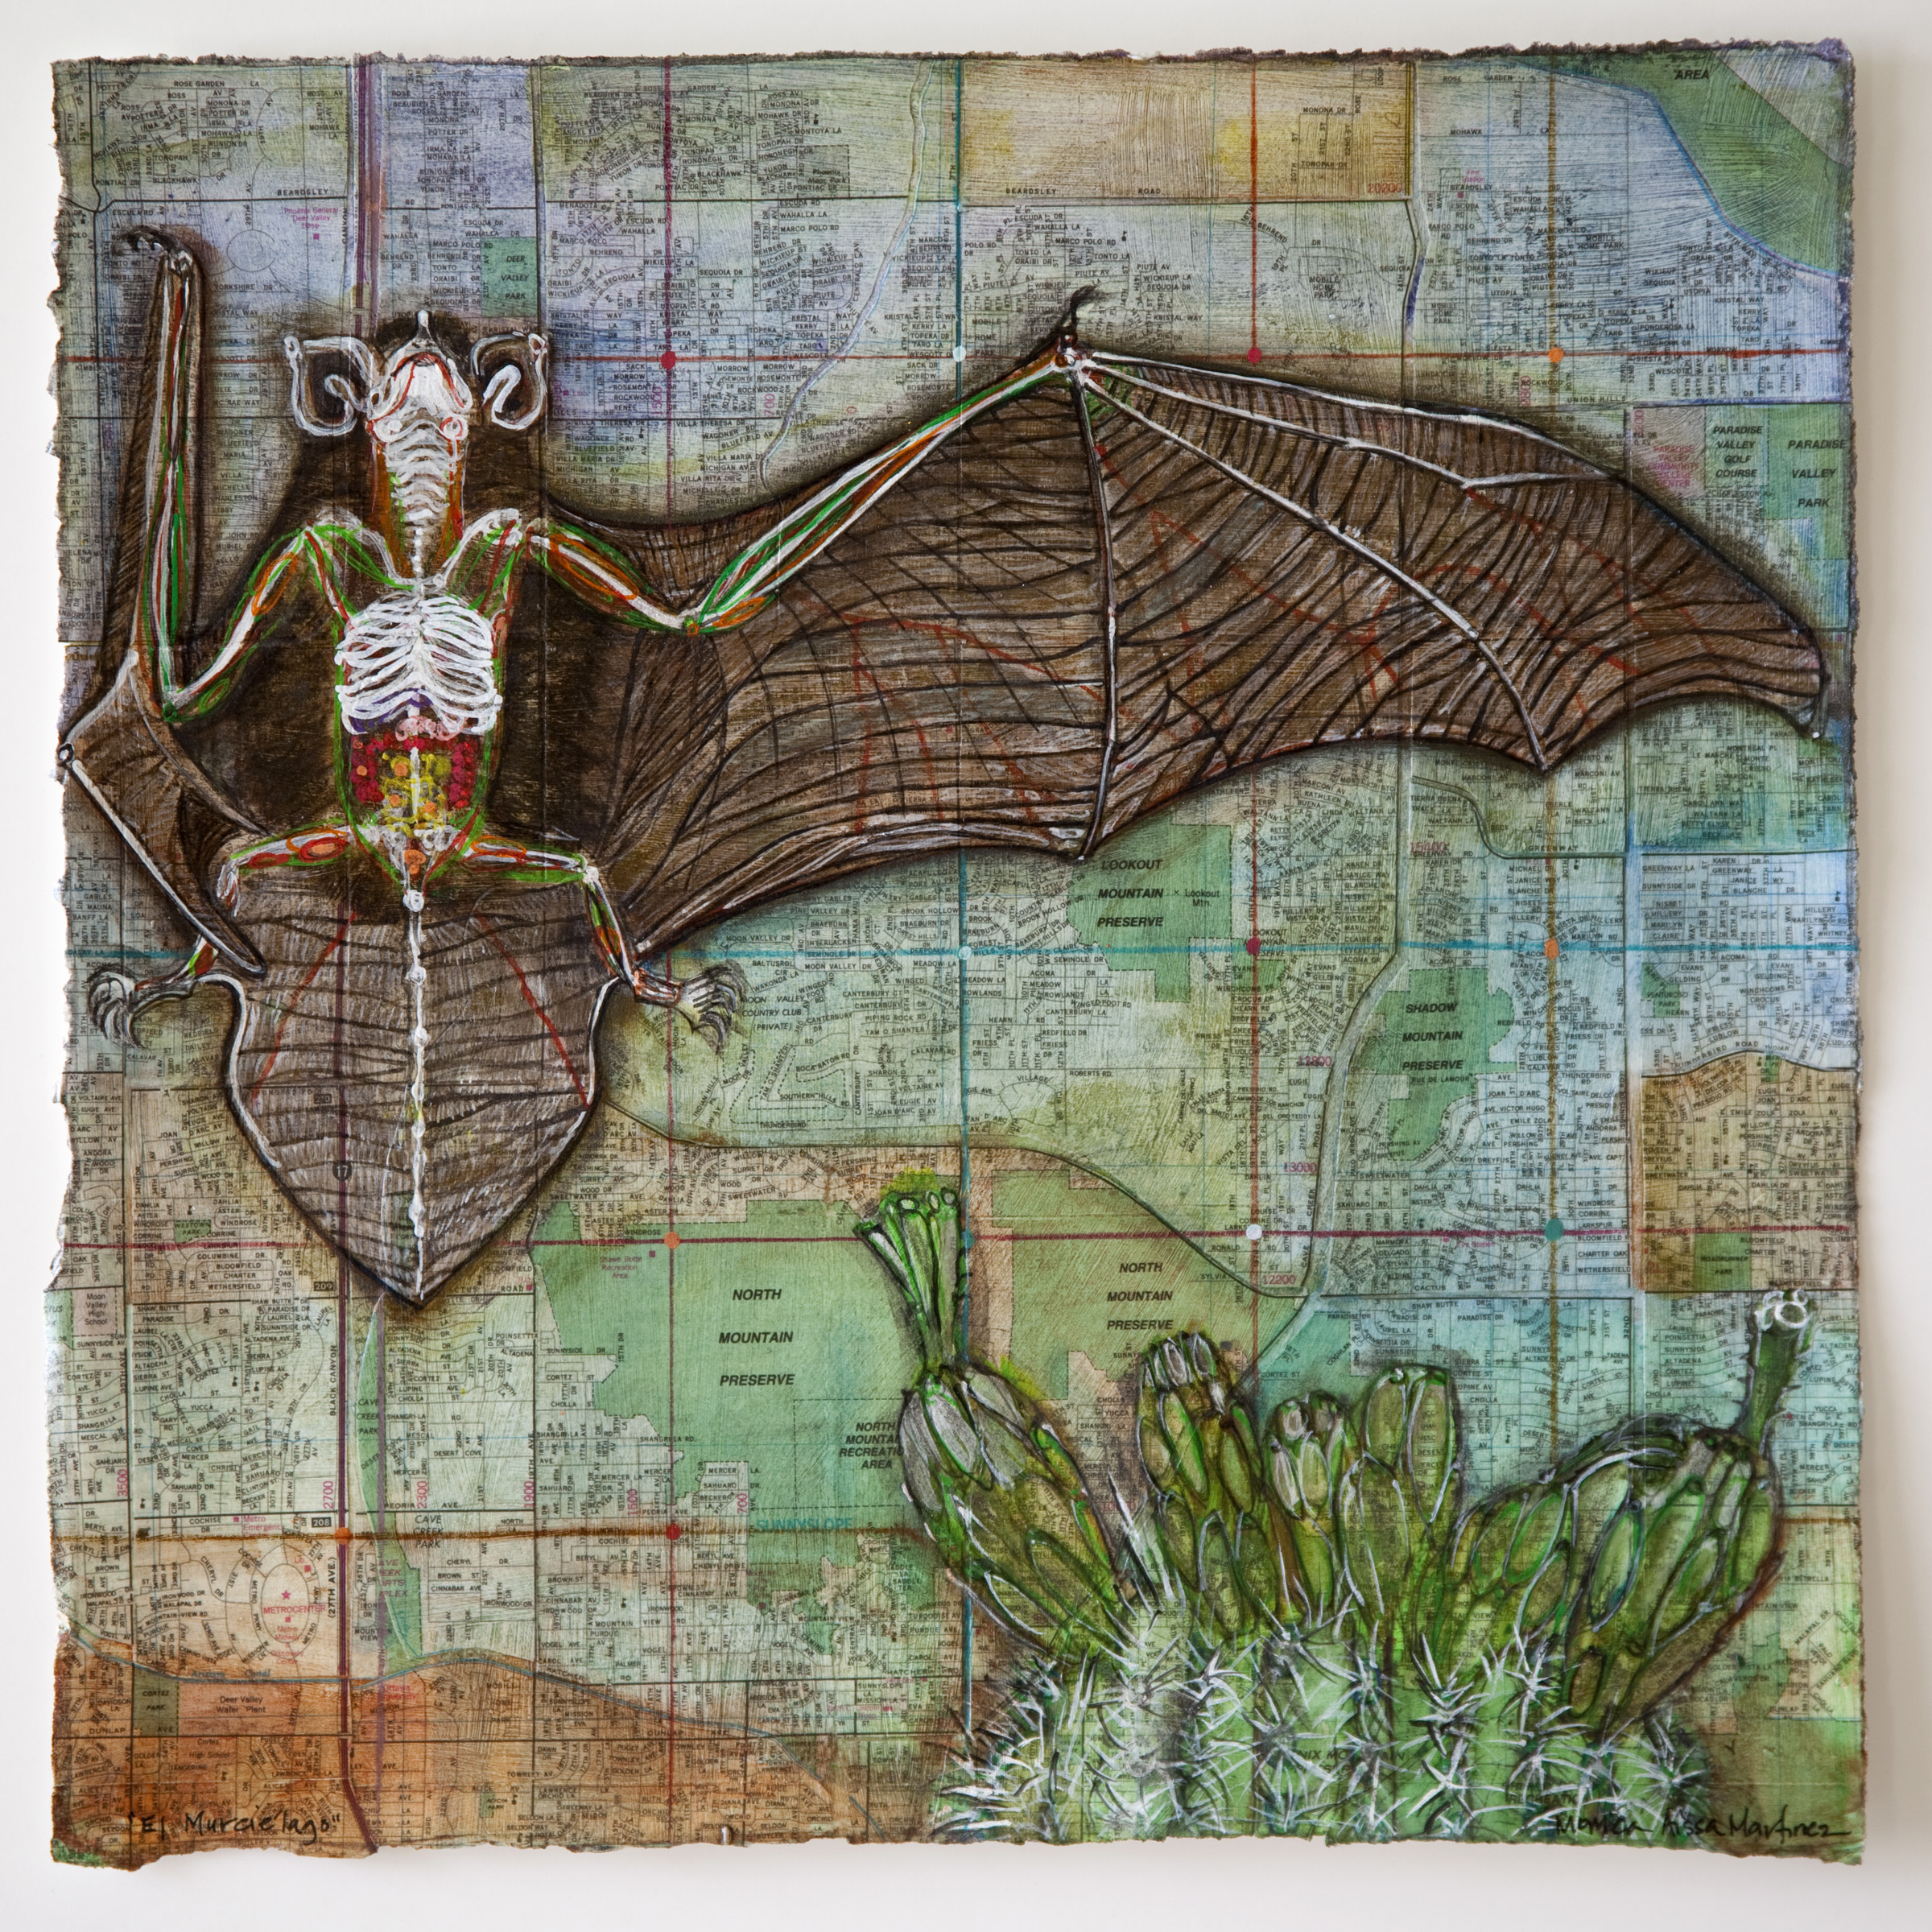 Monica Aissa Martinez, “El murcielago, The Bat: Arizona,” 2014. Mixed media on paper, 12 x 12 in. Image courtesy of the artist.